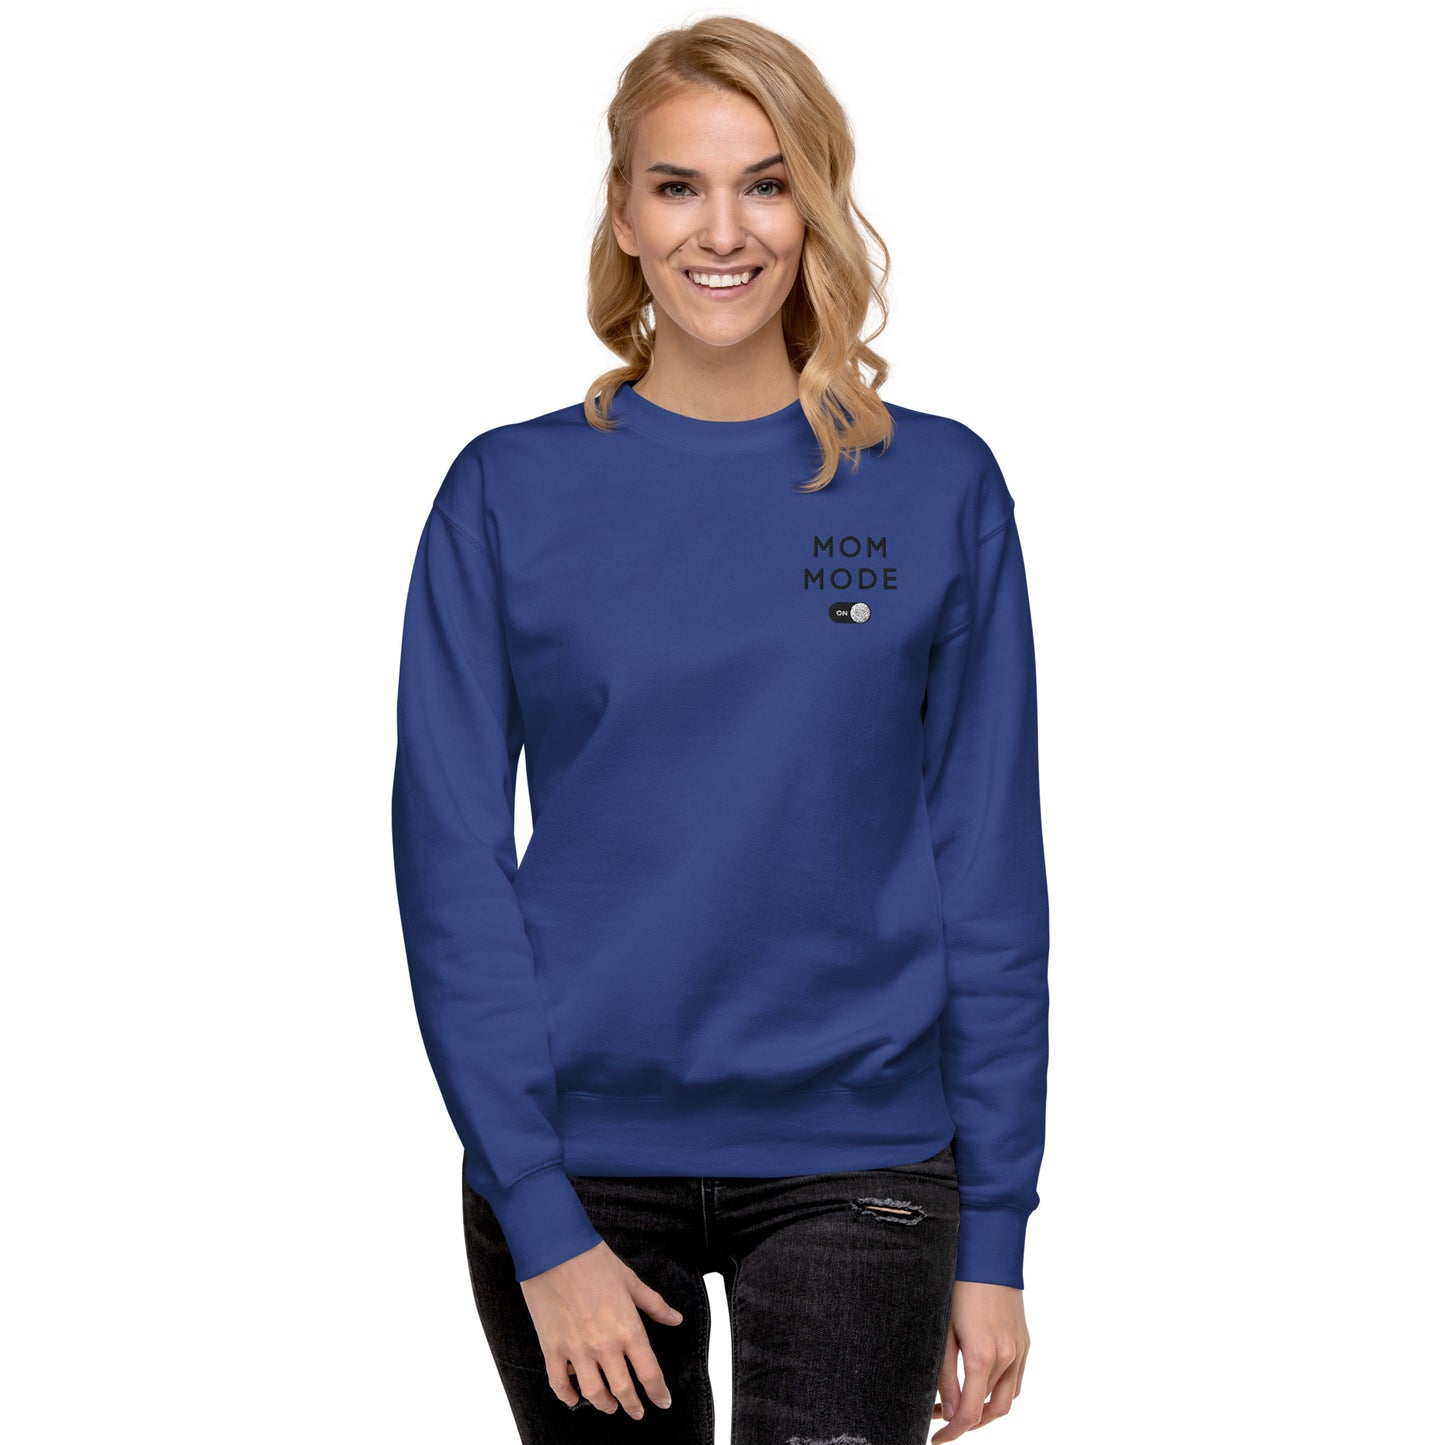 Mom Mode Embroidered Sweatshirt Royal Blue